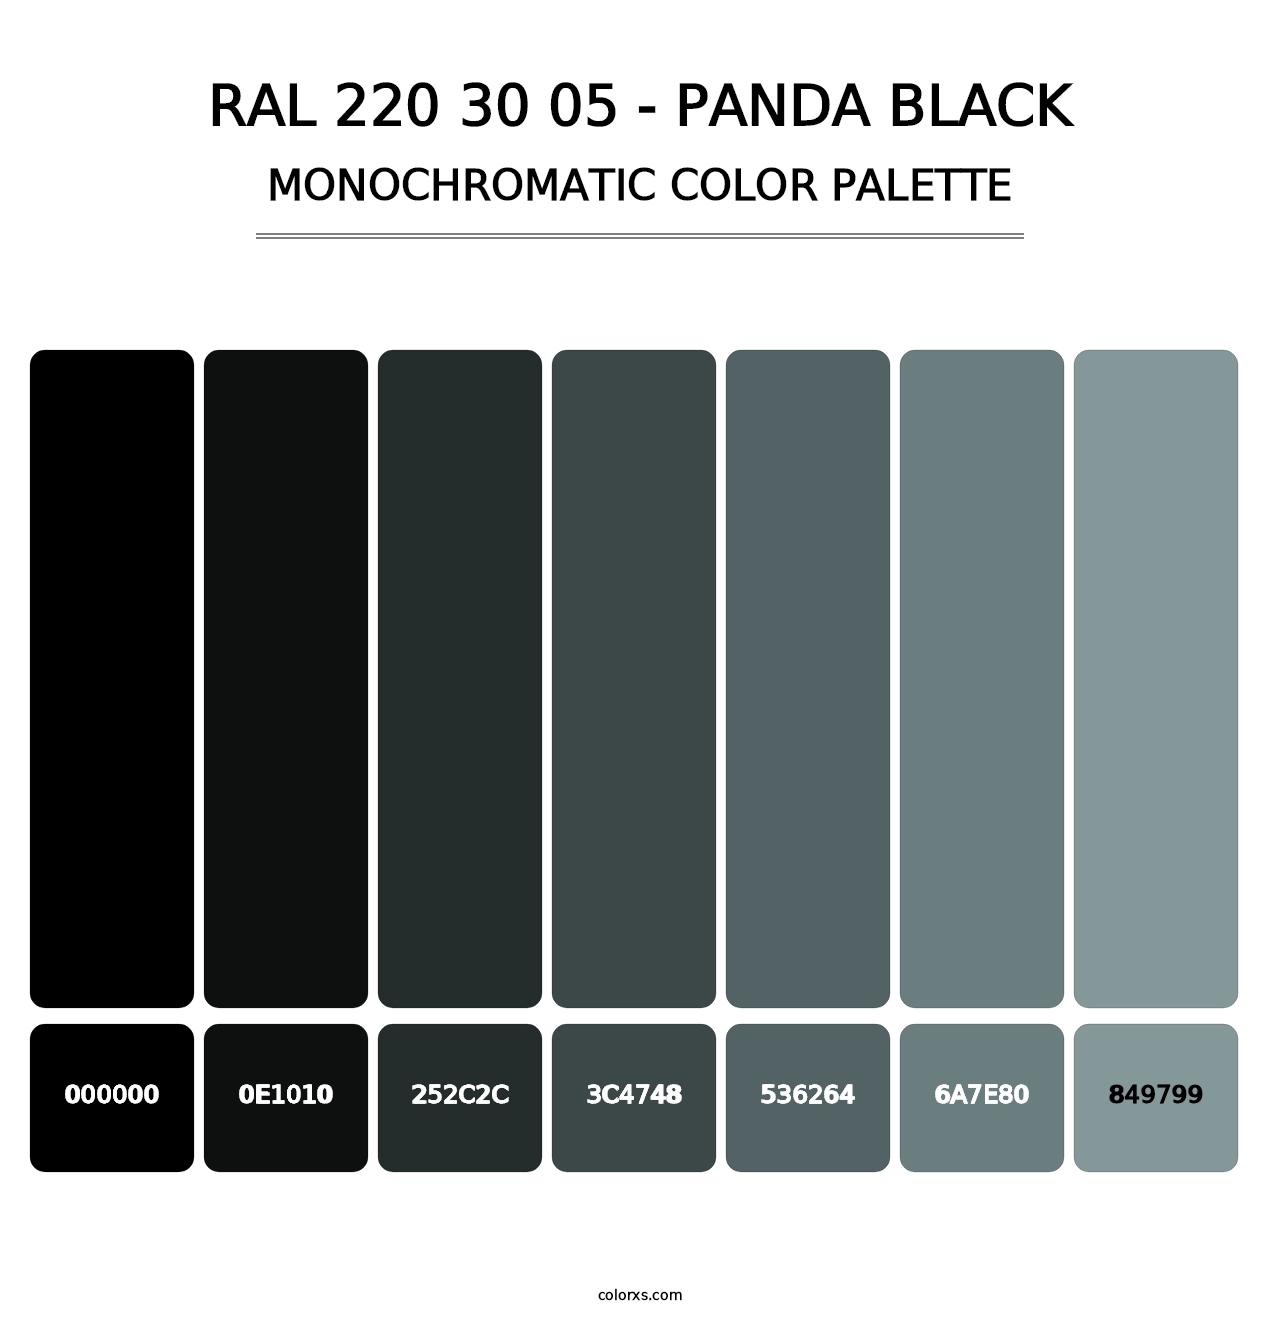 RAL 220 30 05 - Panda Black - Monochromatic Color Palette